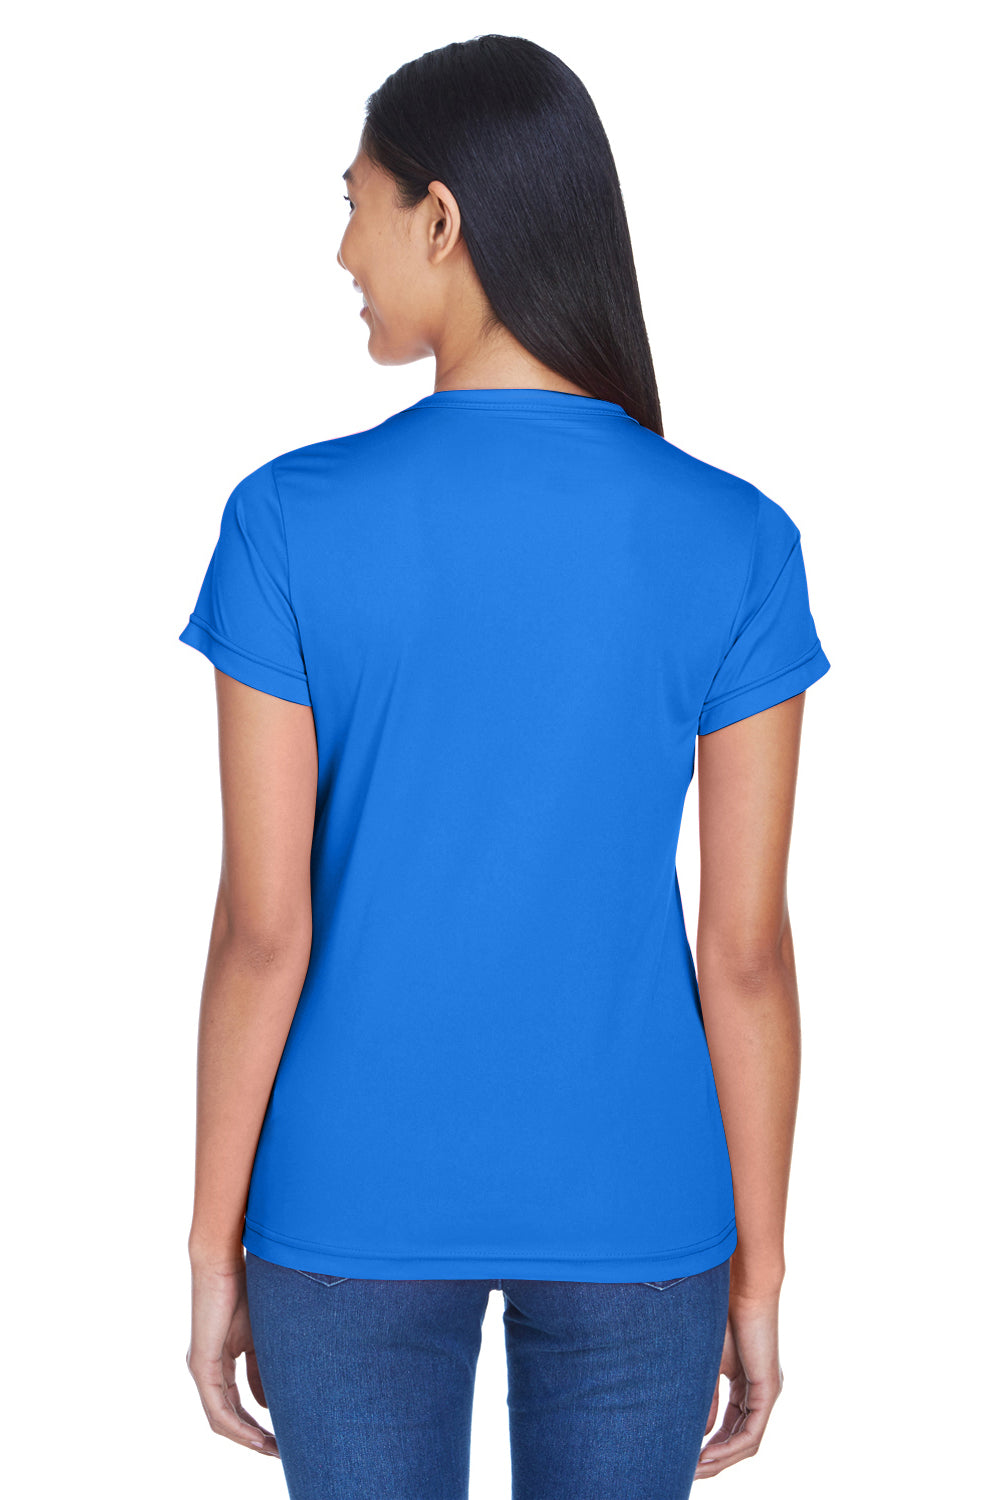 UltraClub 8420L Womens Cool & Dry Performance Moisture Wicking Short Sleeve Crewneck T-Shirt Royal Blue Back